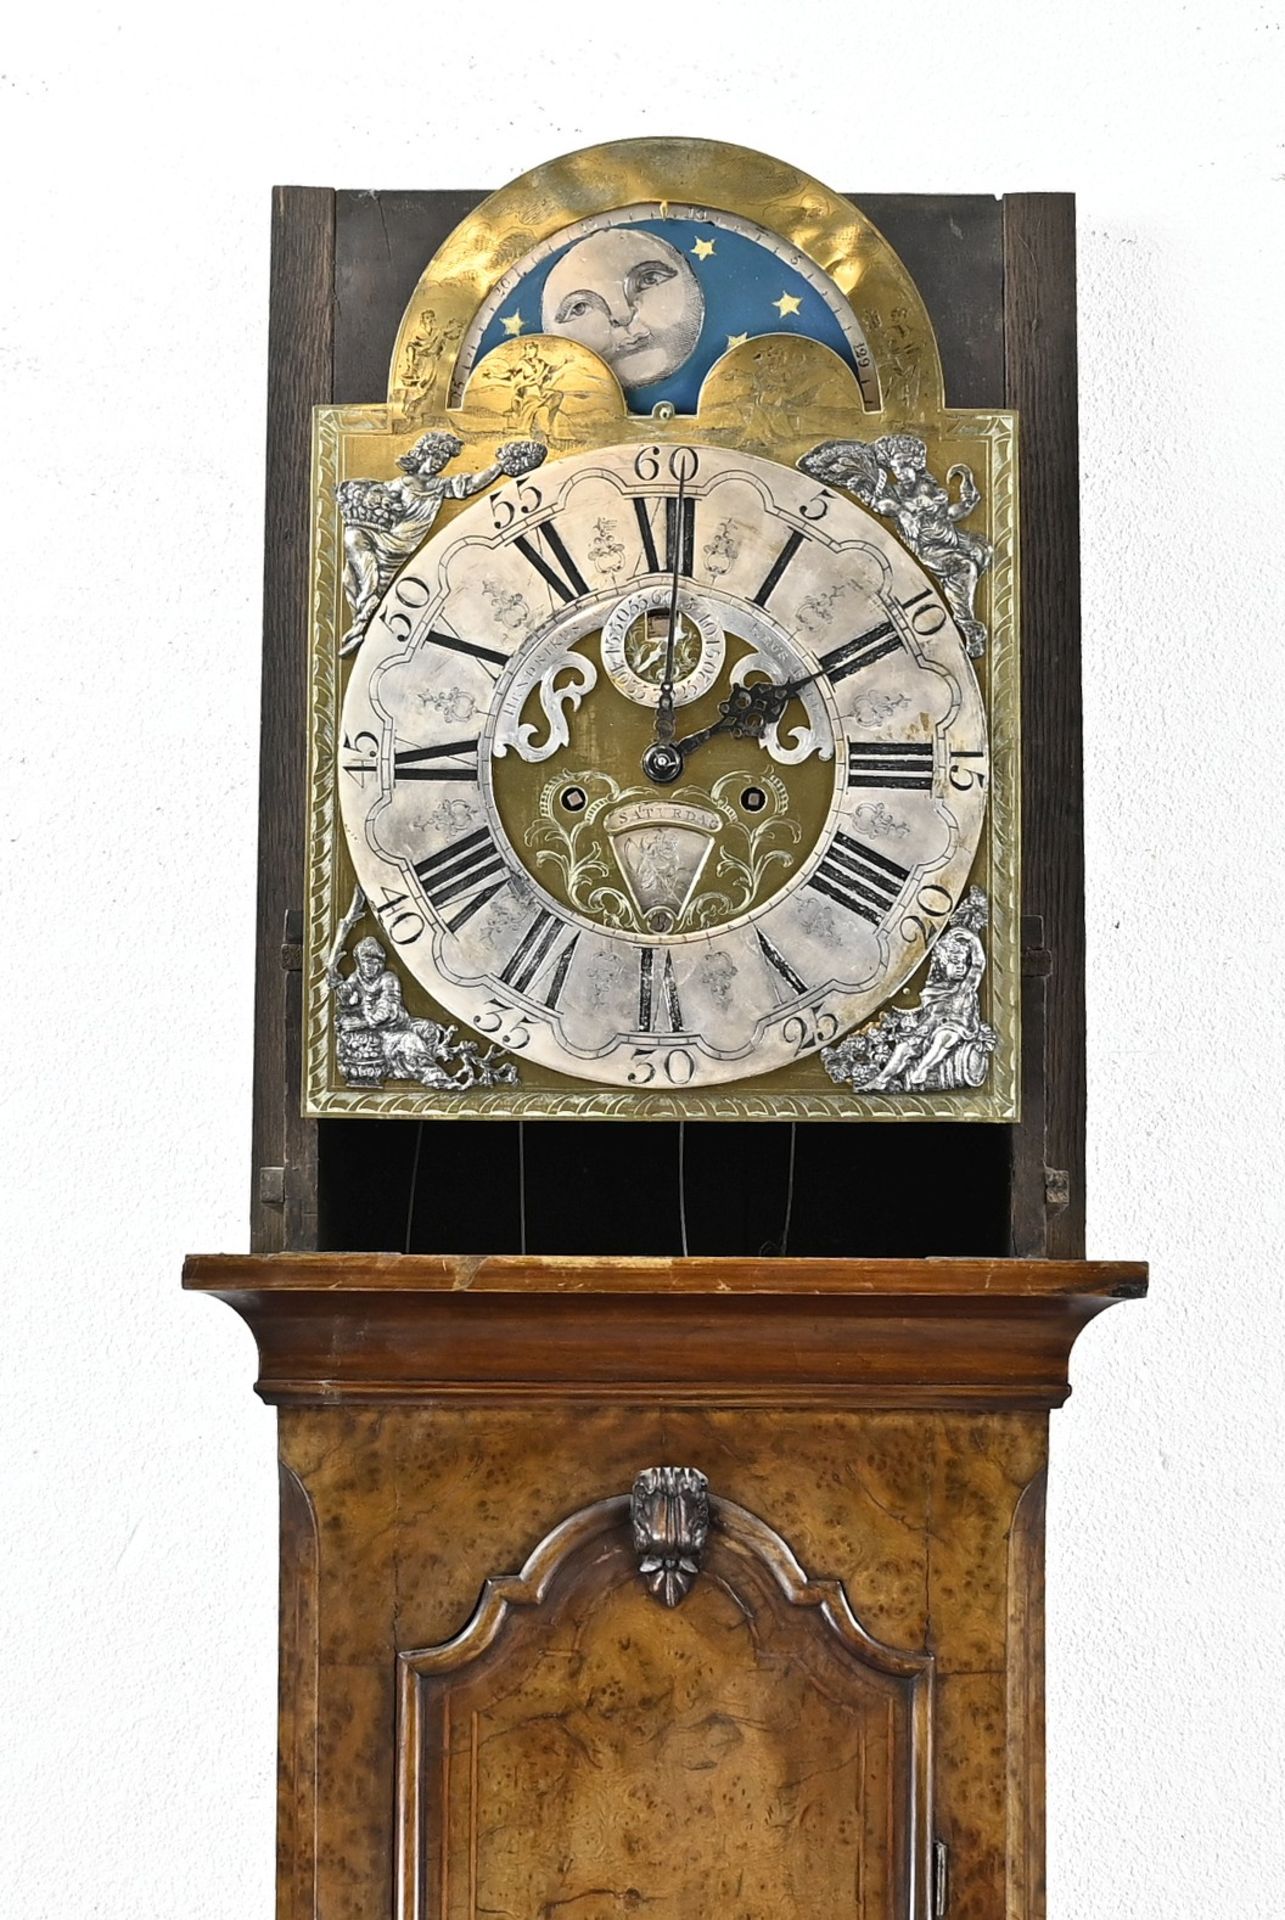 18th century grandfather clock, 1740 - Image 2 of 3